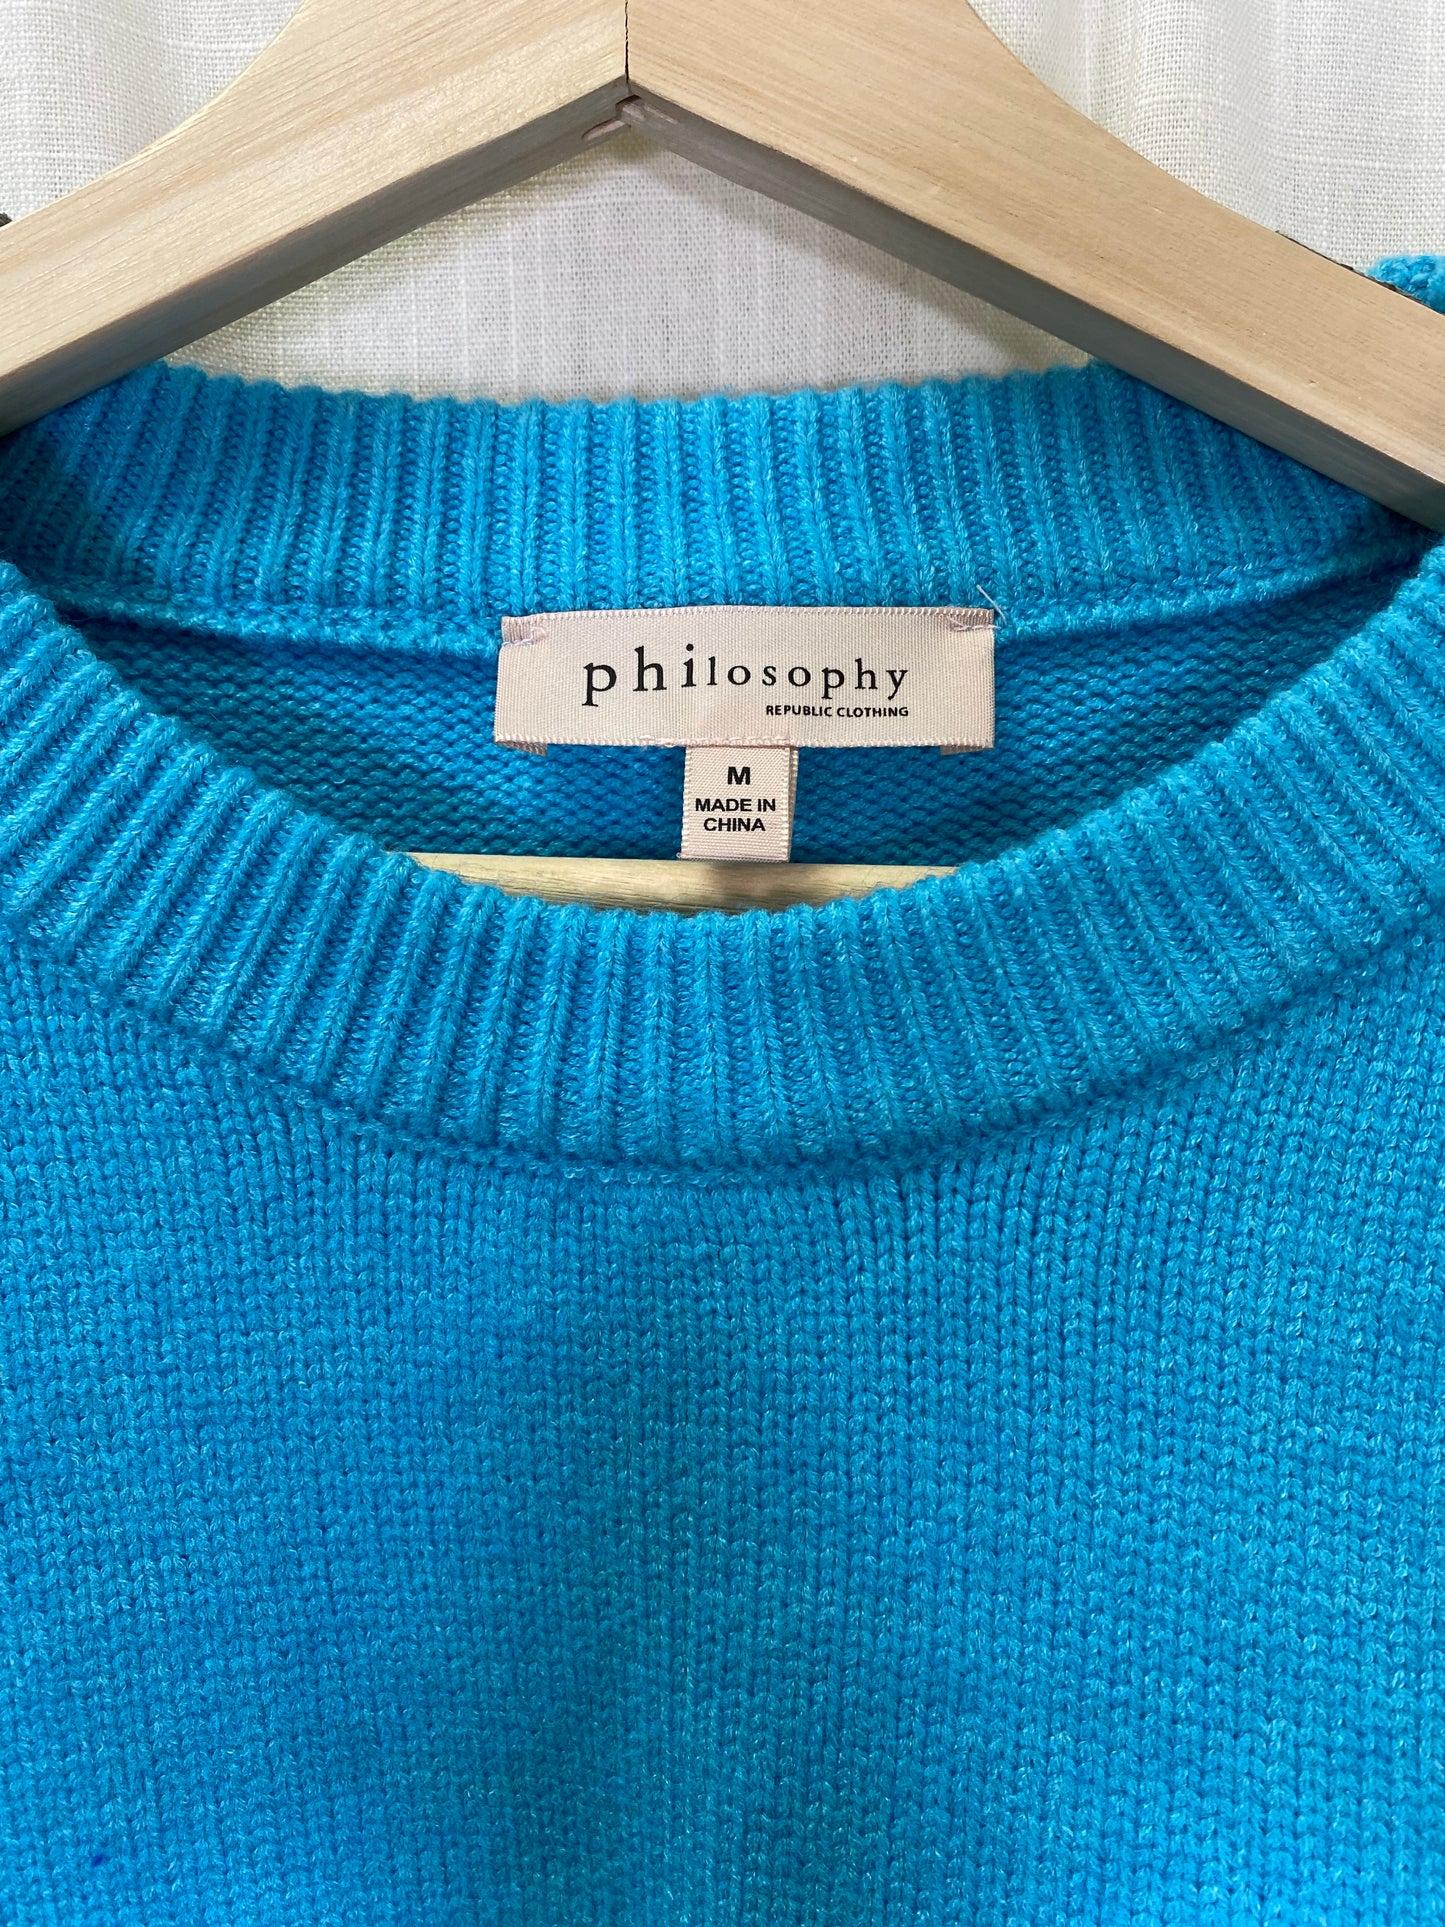 Philosophy Sweater (M)